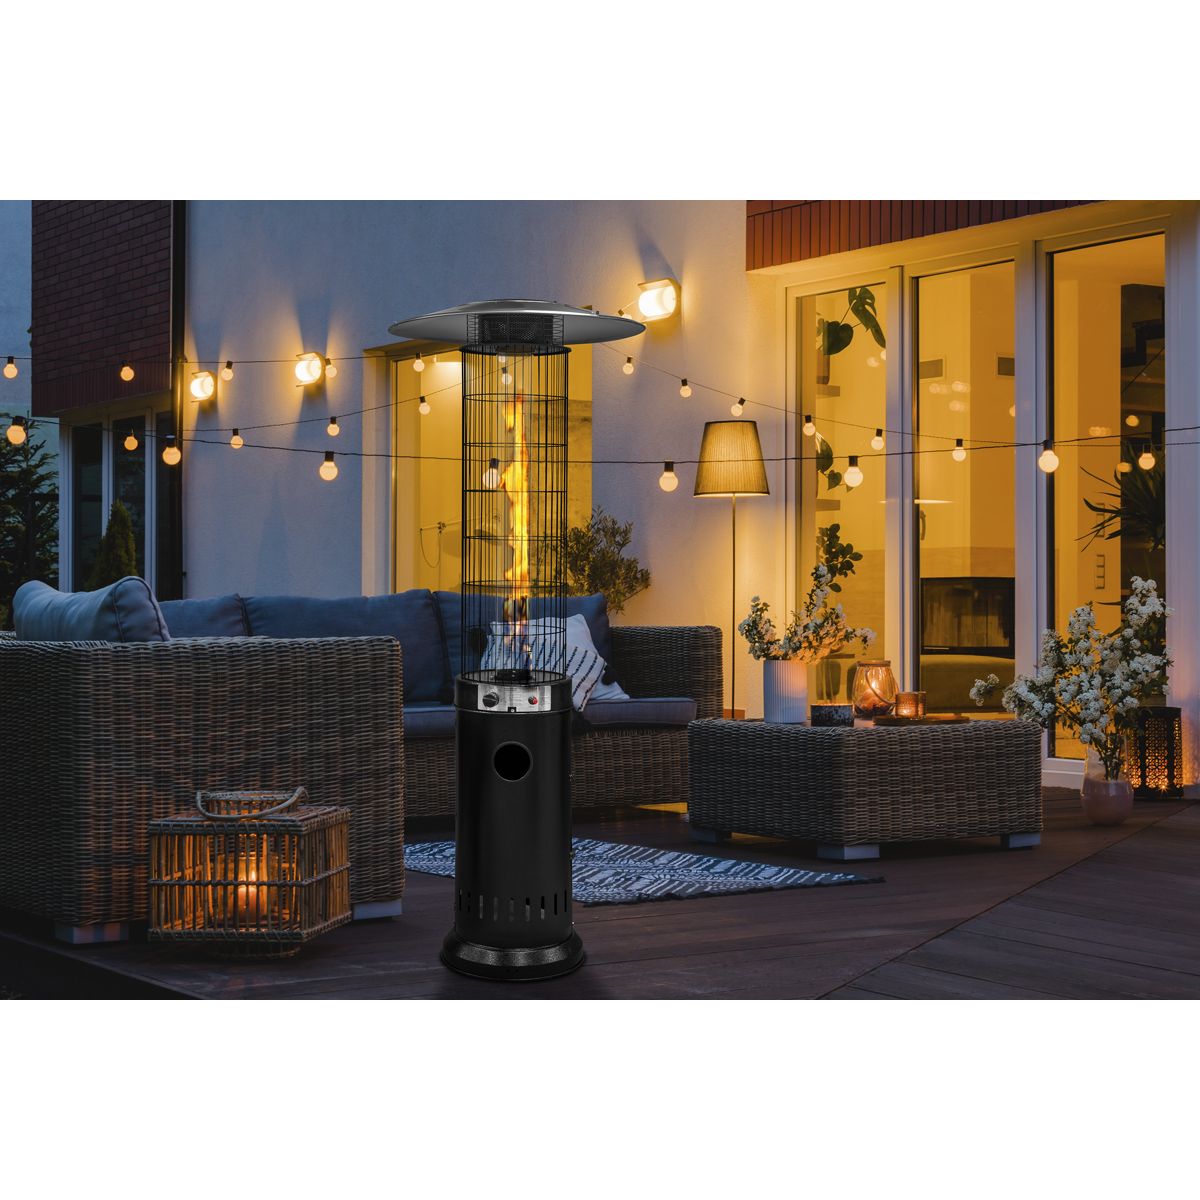 Dellonda DG124 13kW Black Gas Patio Heater for Commercial & Domestic Use